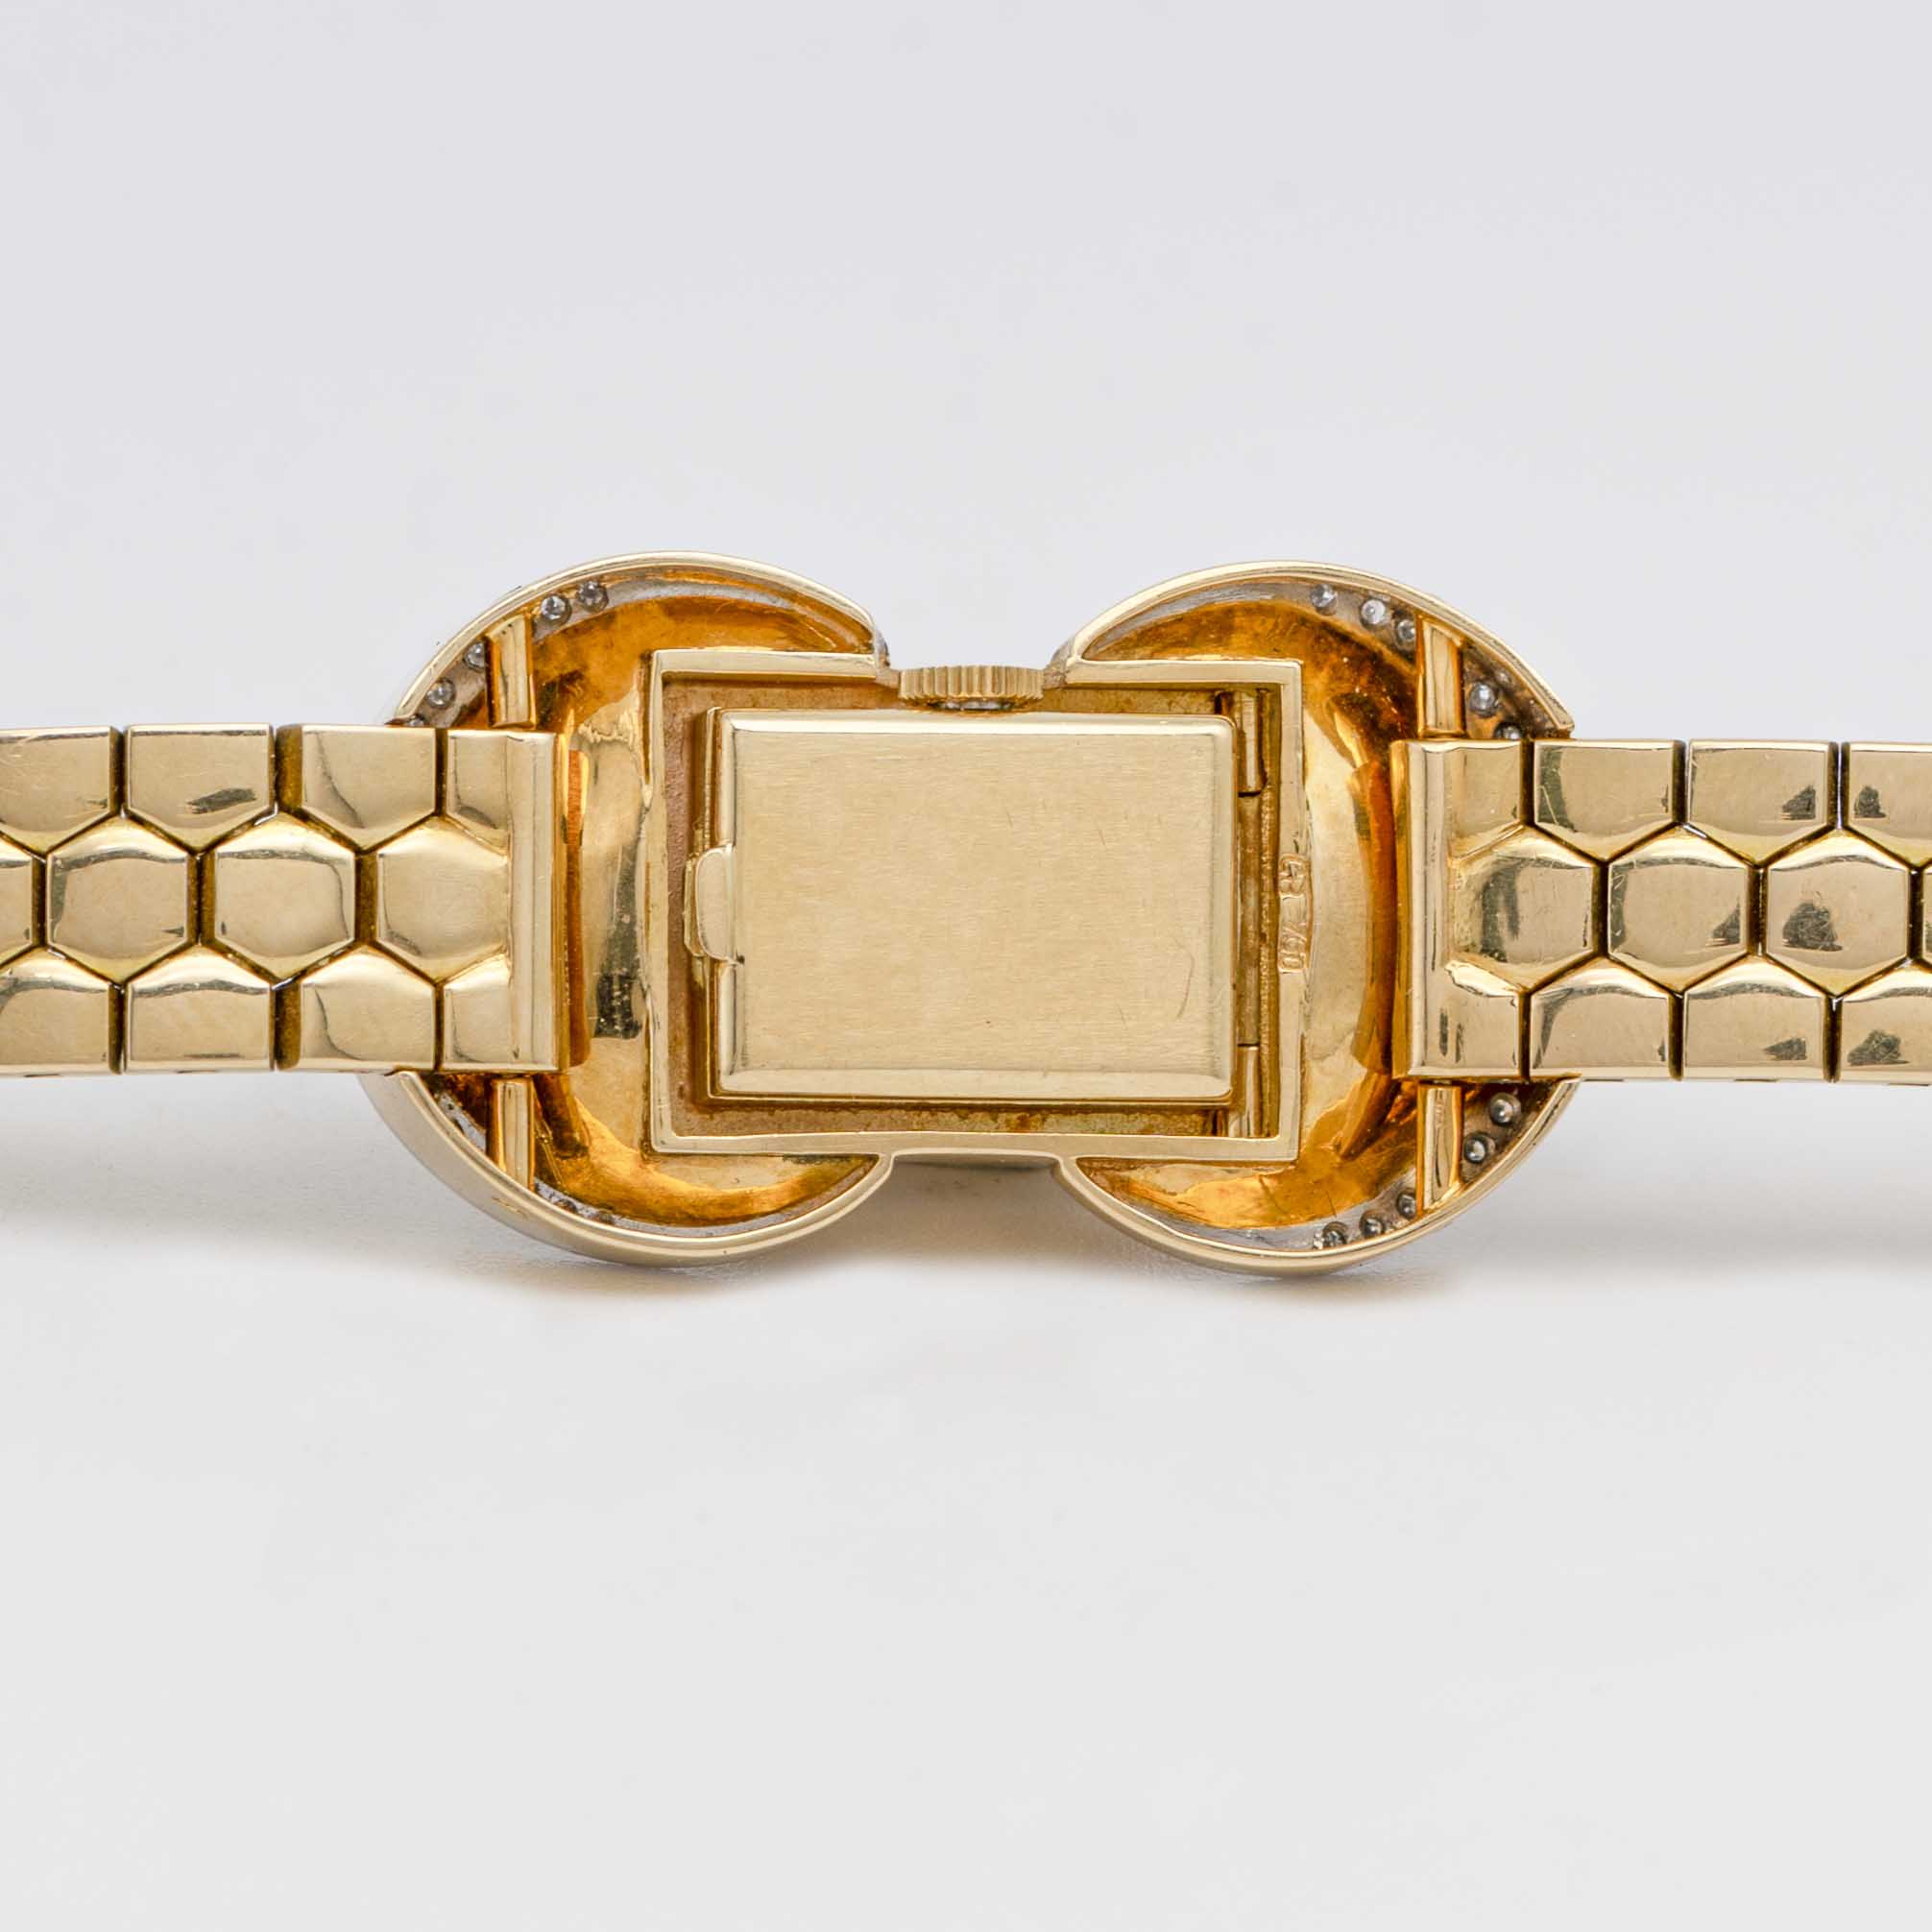 A FINE & RARE LADIES 18K SOLID GOLD, DIAMOND & SAPPHIRE ROLEX BRACELET WATCH CIRCA 1940s, REF. 602 - Image 9 of 14